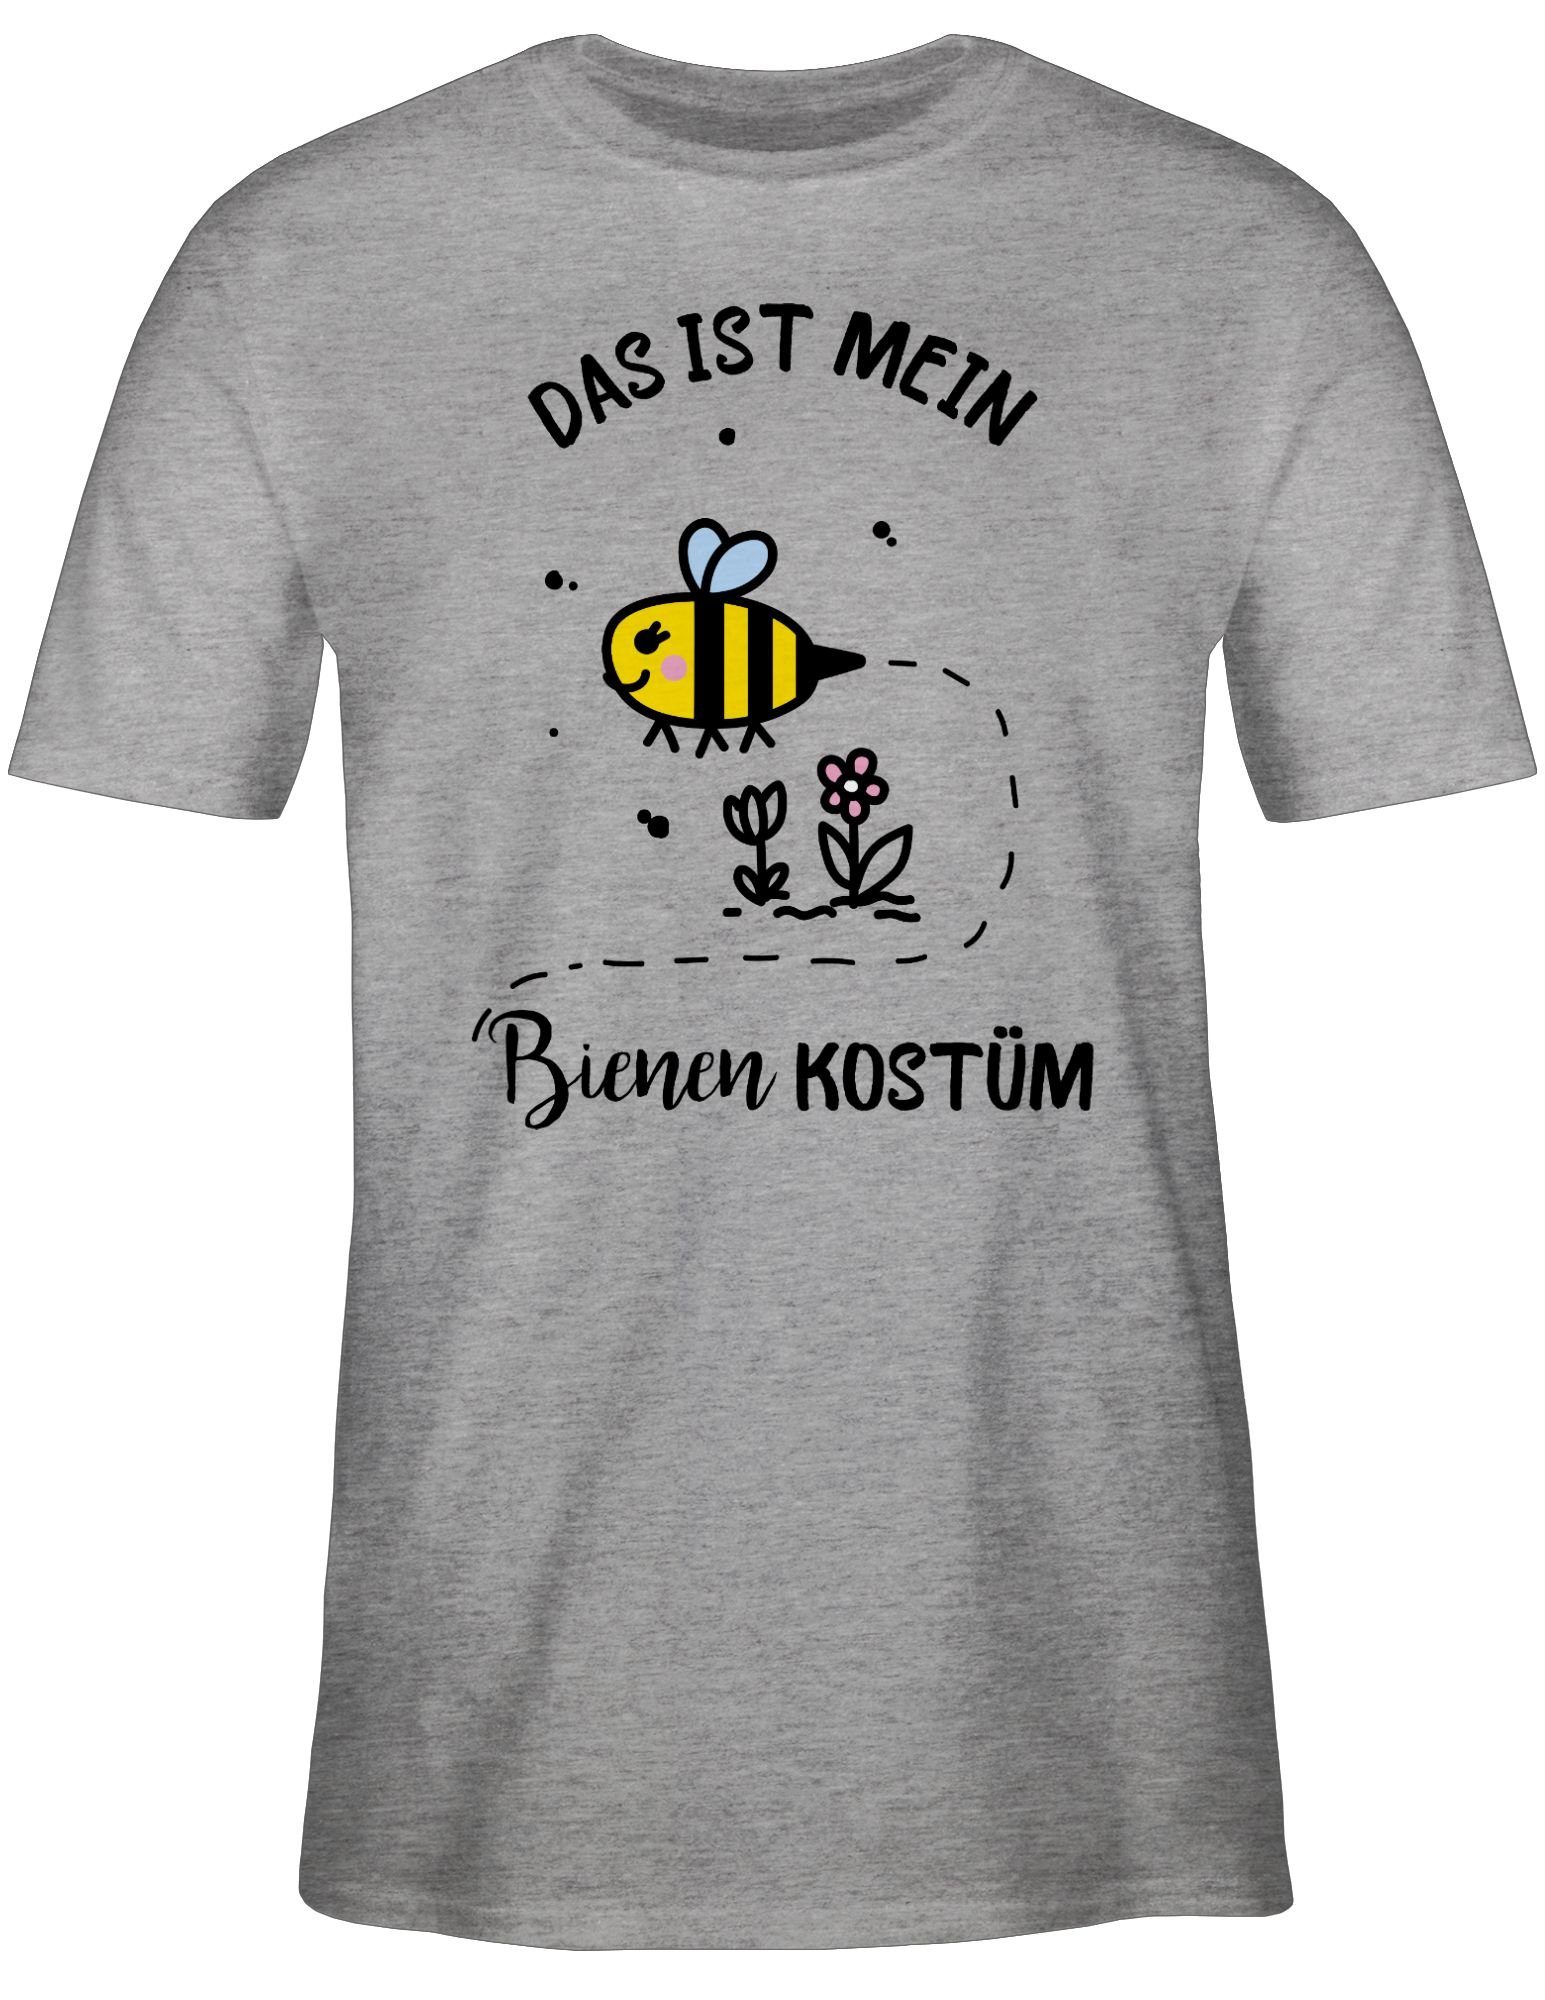 ist meliert Karneval Das Shirtracer Grau Outfit Kostüm Bienen 3 T-Shirt mein